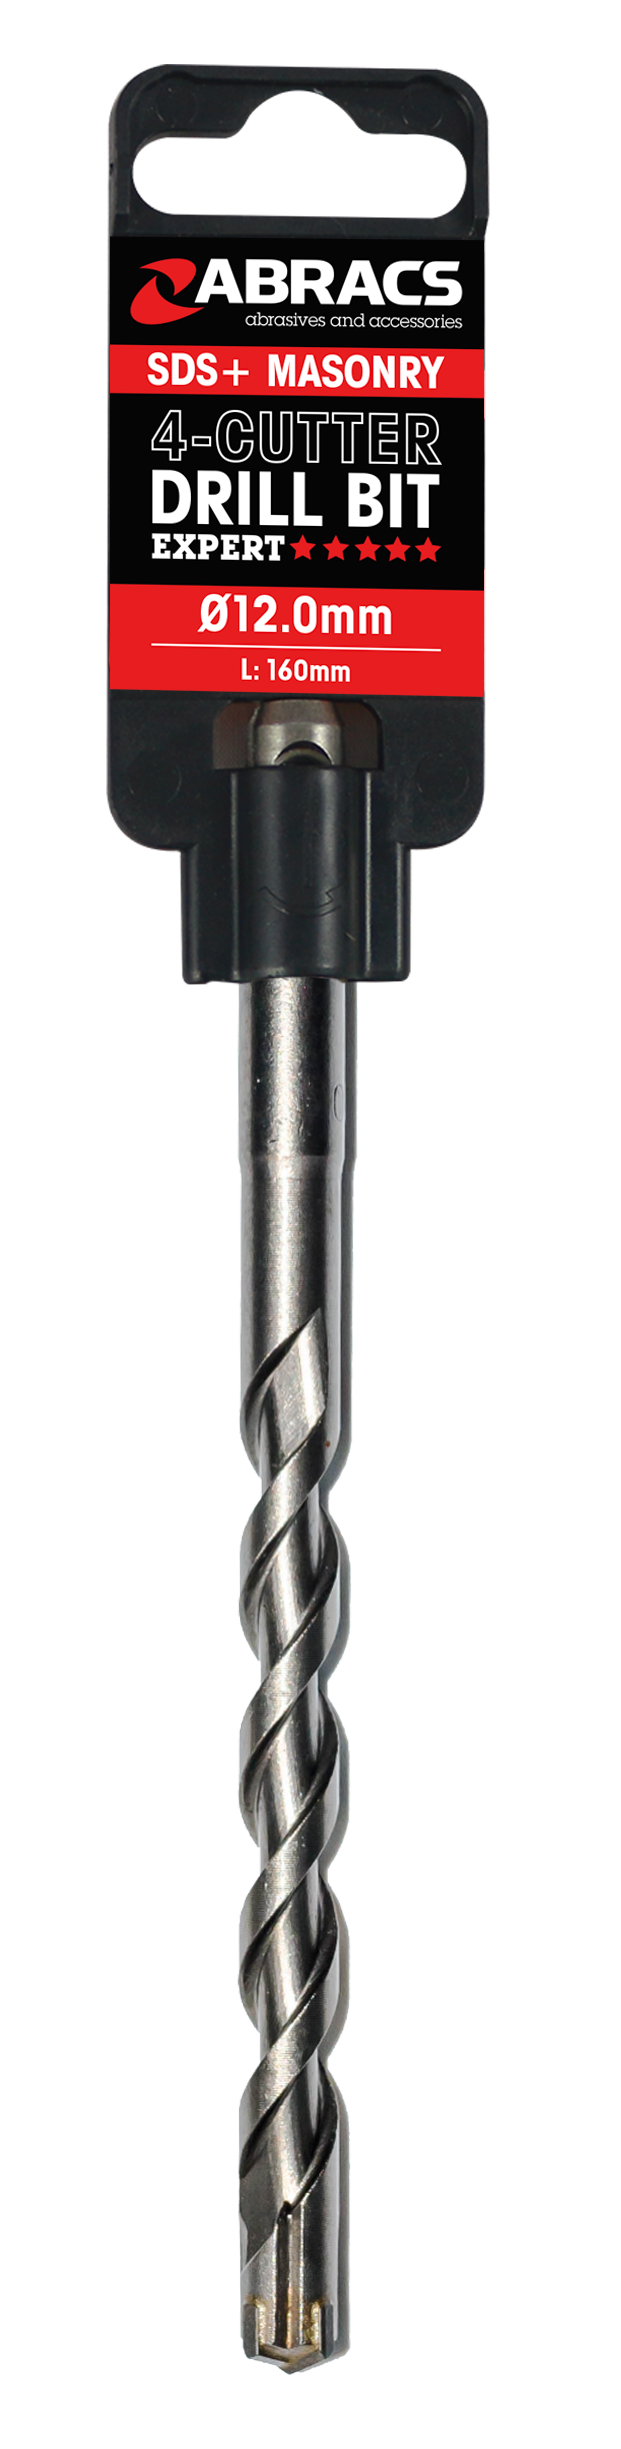 DBCX100210 10.0mm x 210mm SDS+ Masonry Drill Bit - 4 Cutter